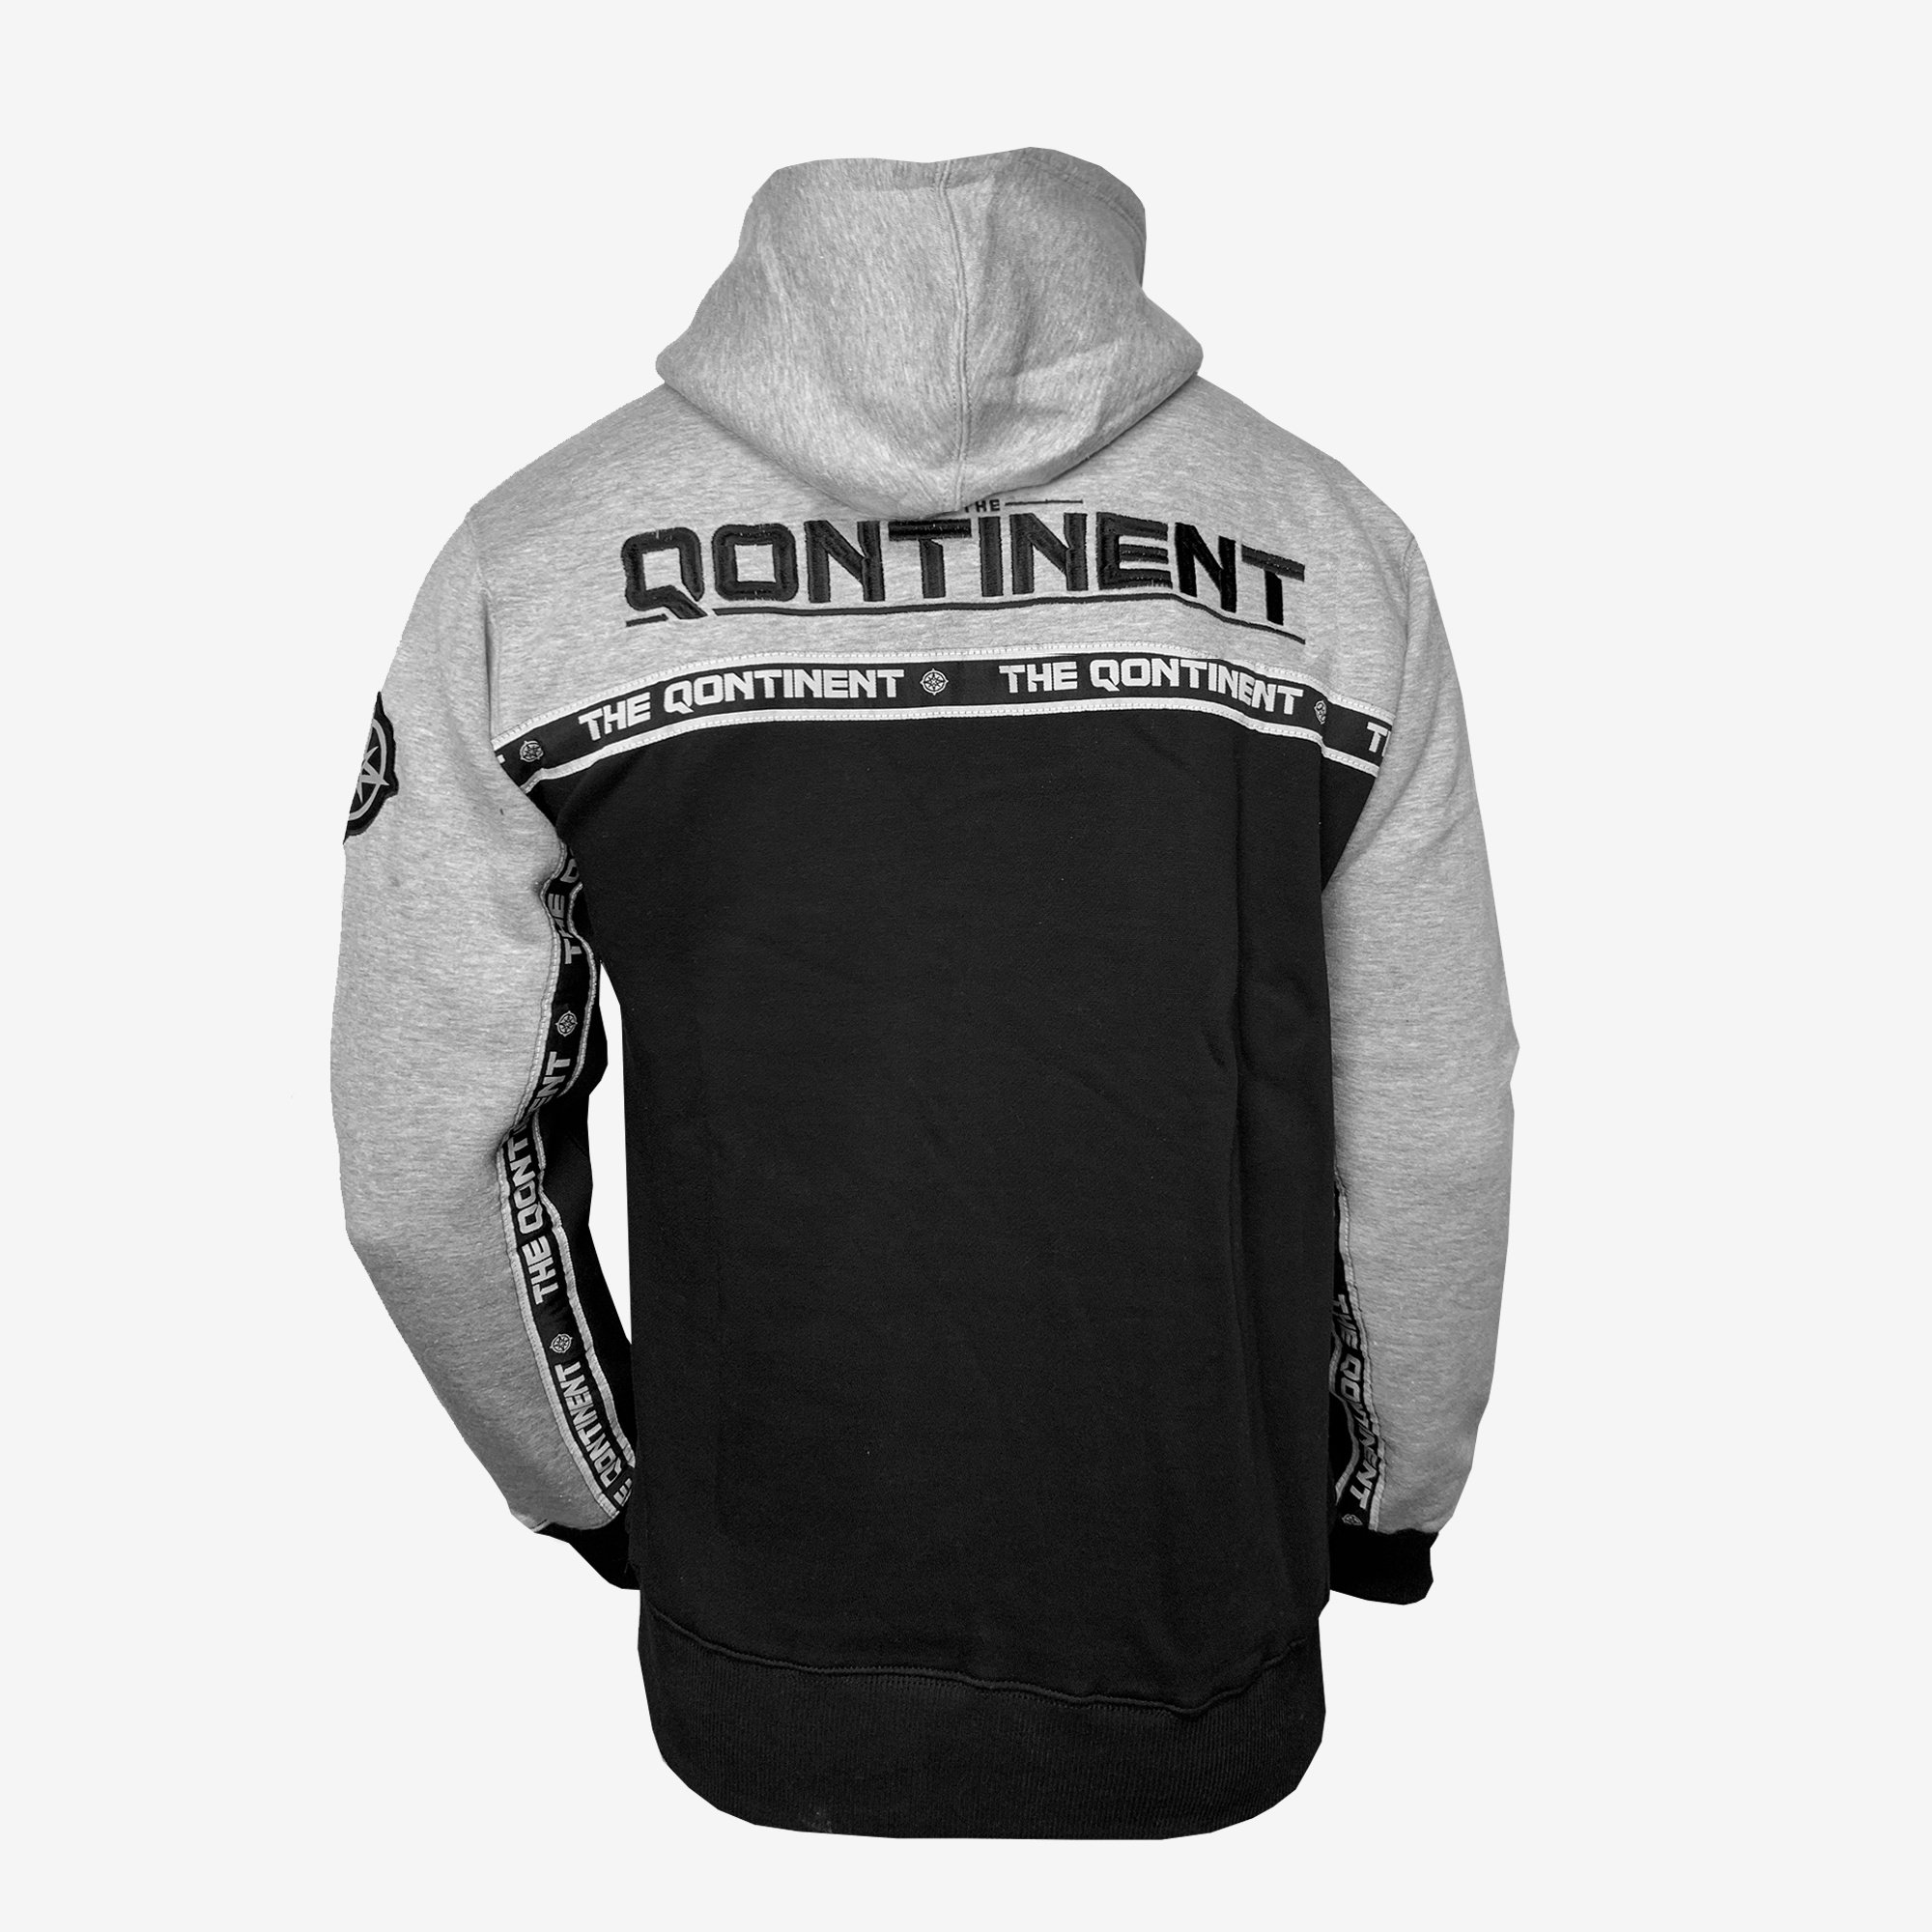 The Qontinent - Grey 2 Tone Hoody